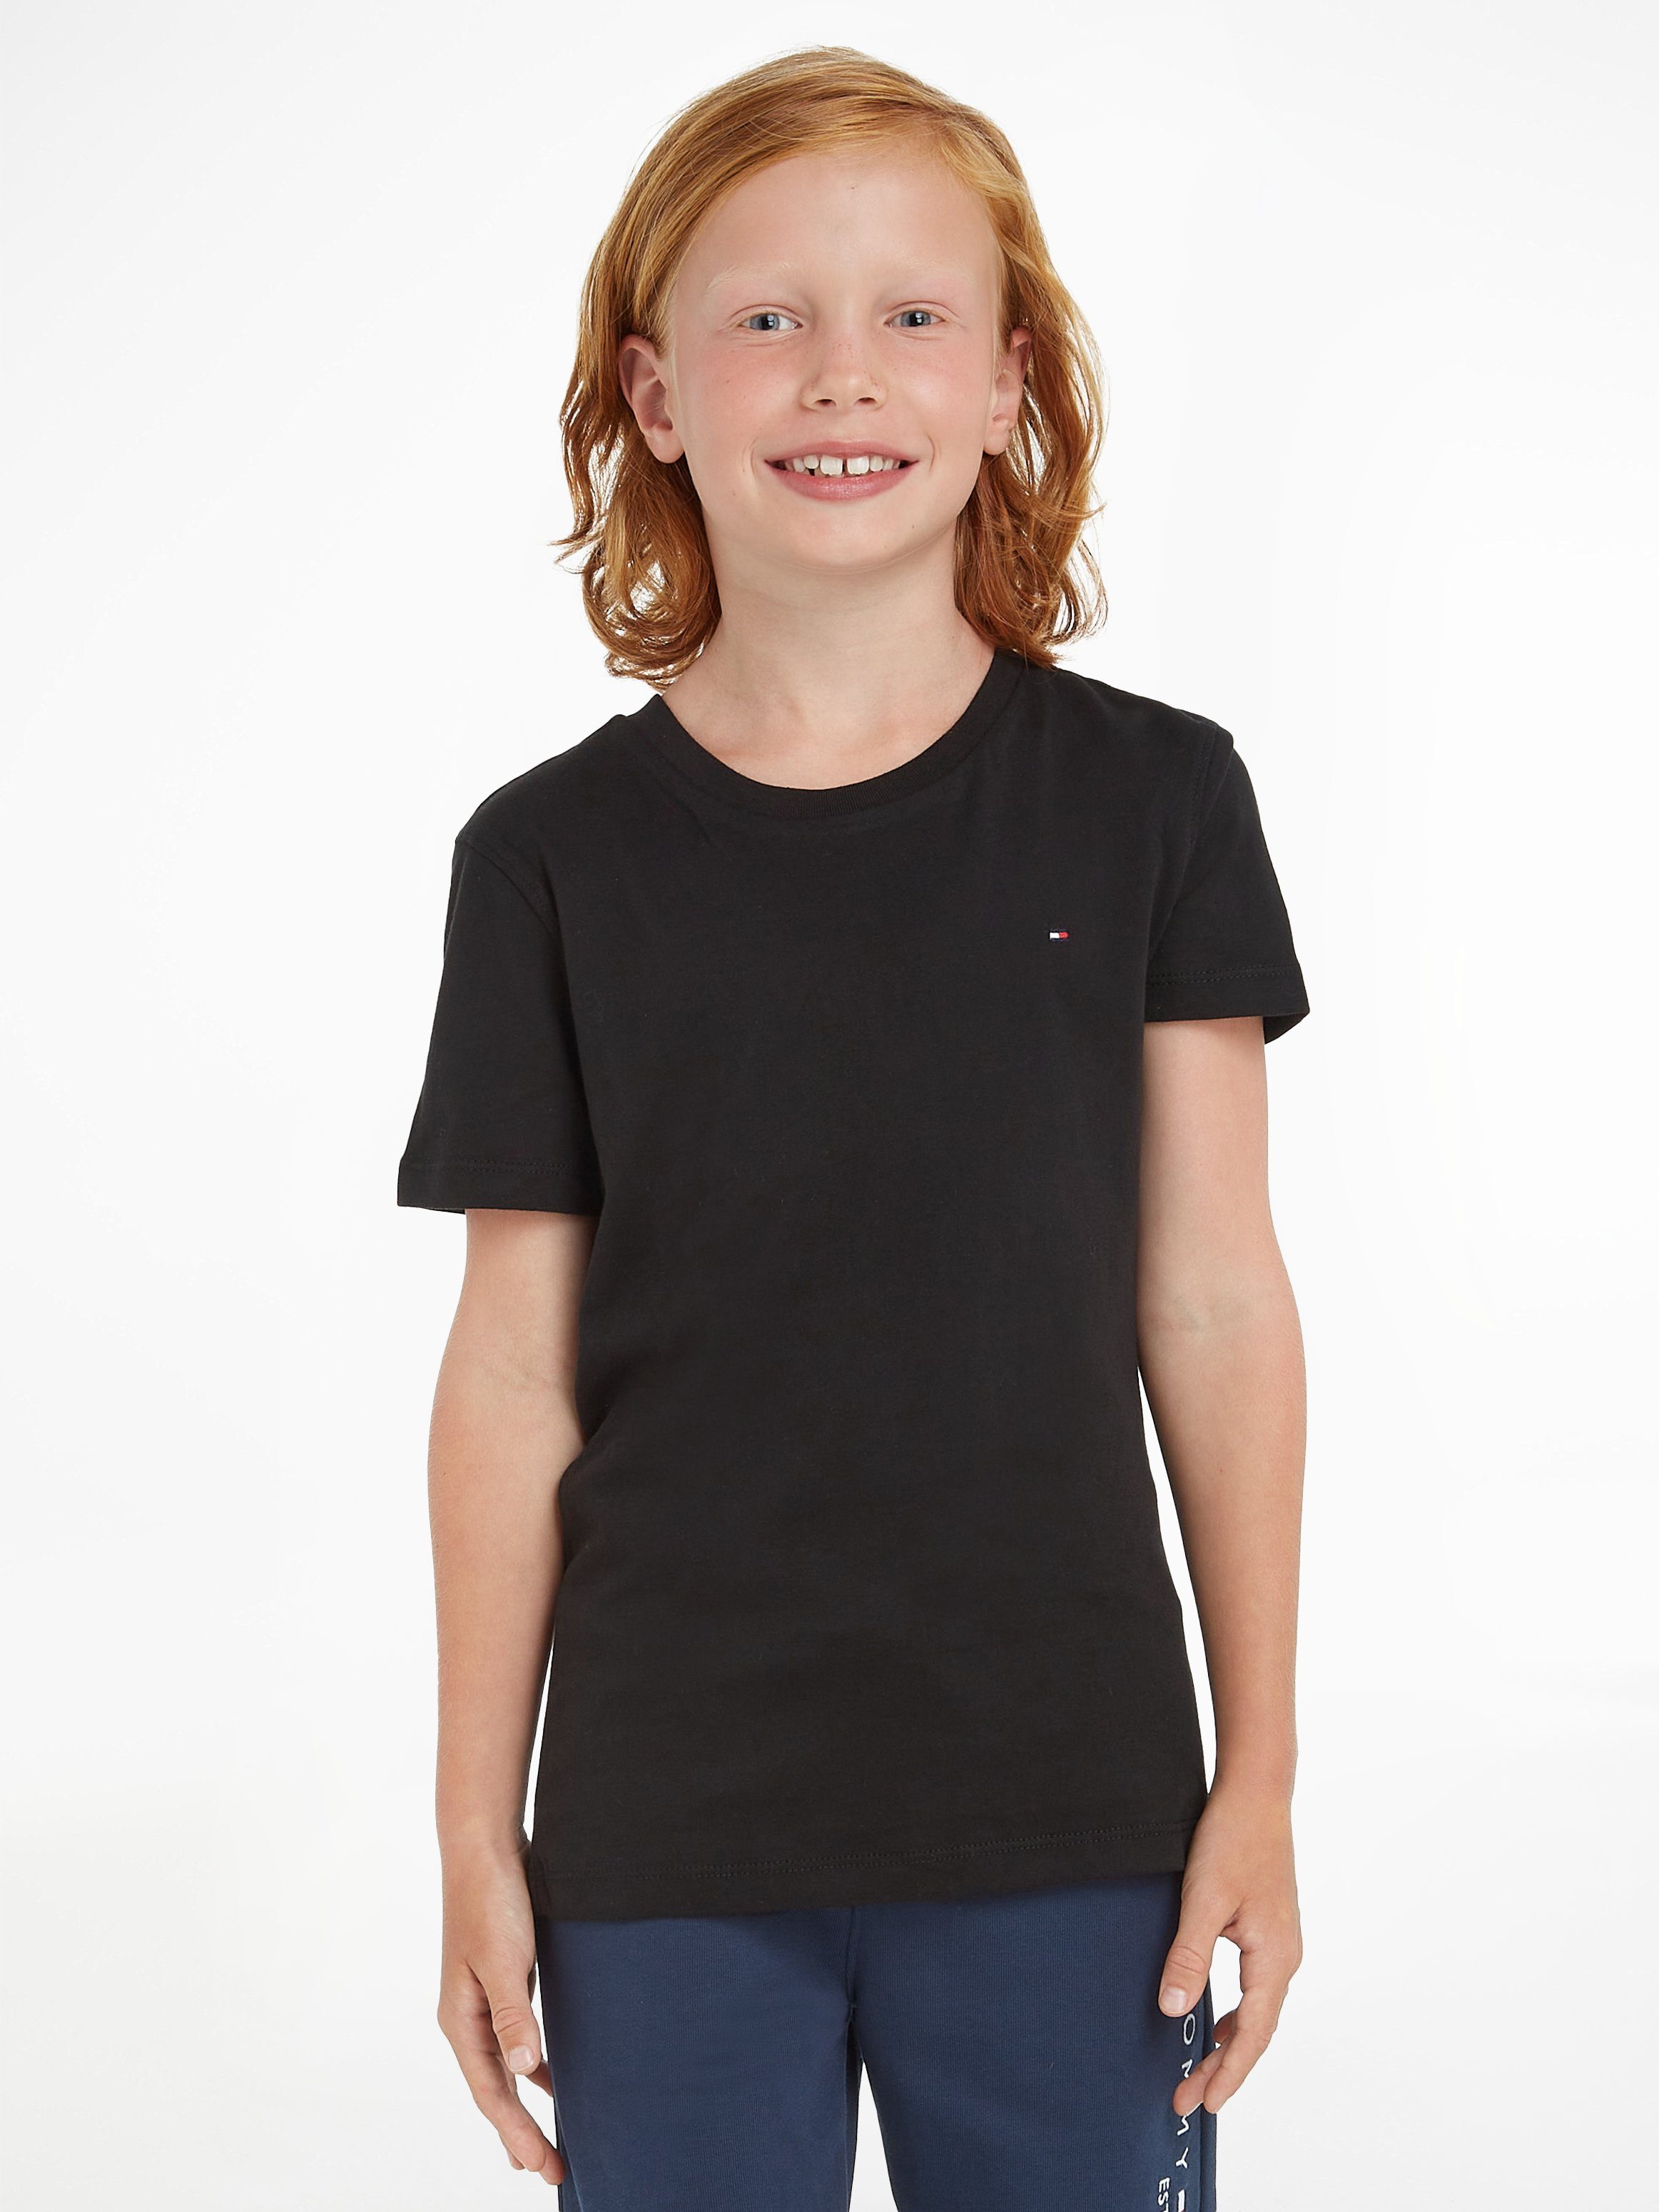 BASIC T-Shirt Hilfiger Kinder Tommy Kids CN MiniMe,für Junior BOYS KNIT Jungen